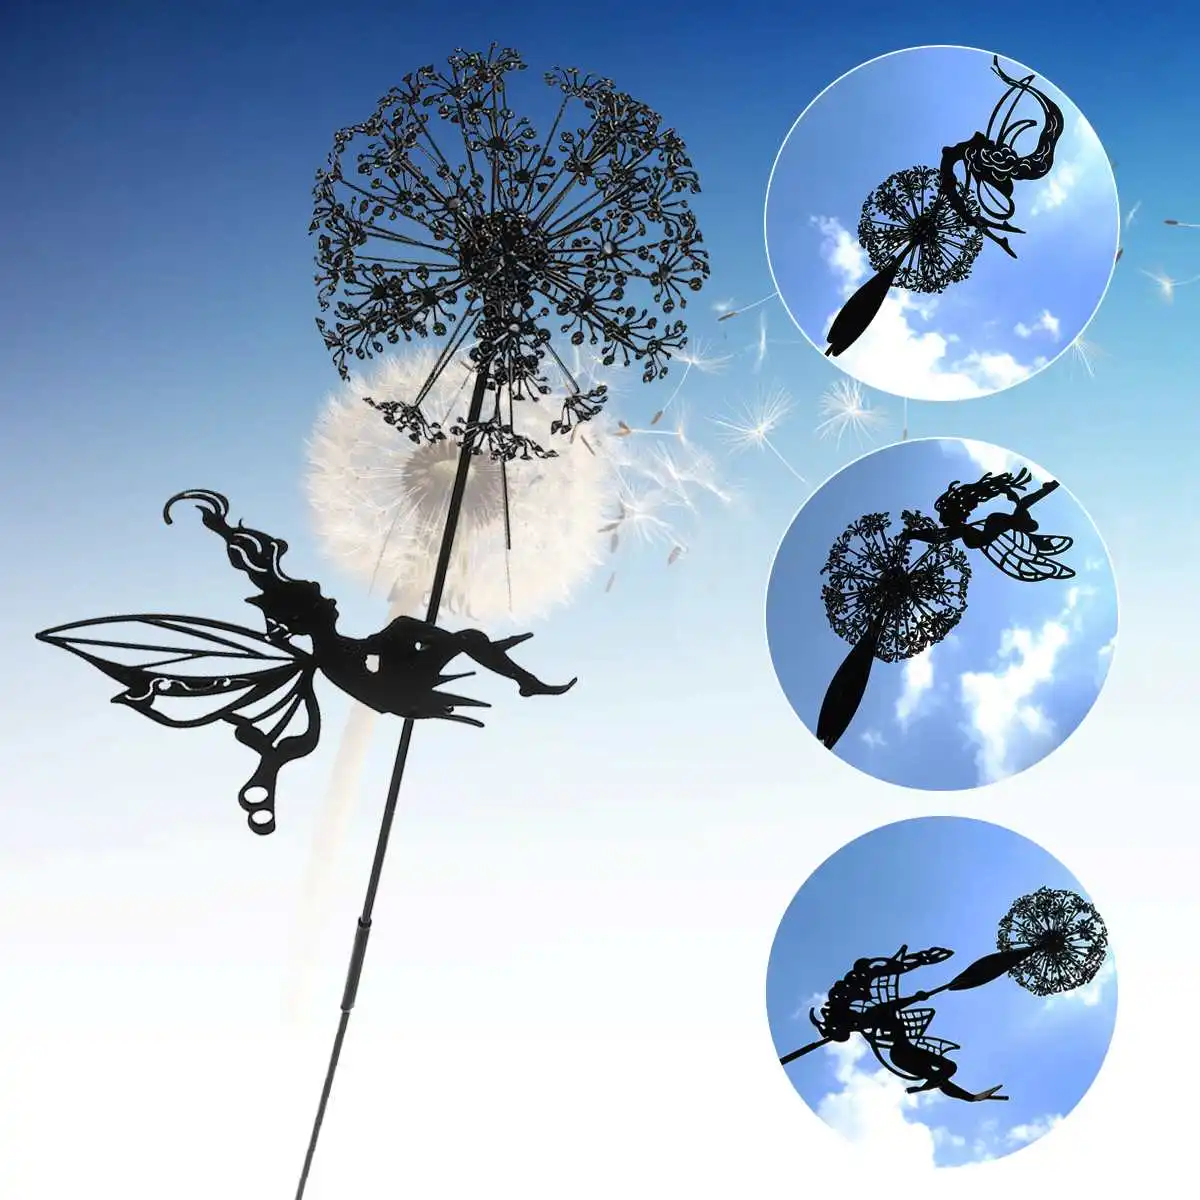 

Pixies Fairy Garden Sculptures Stake Fairies and Dandelions Dance Together Landscape Metal Miniature Figurine Lawn Decorative